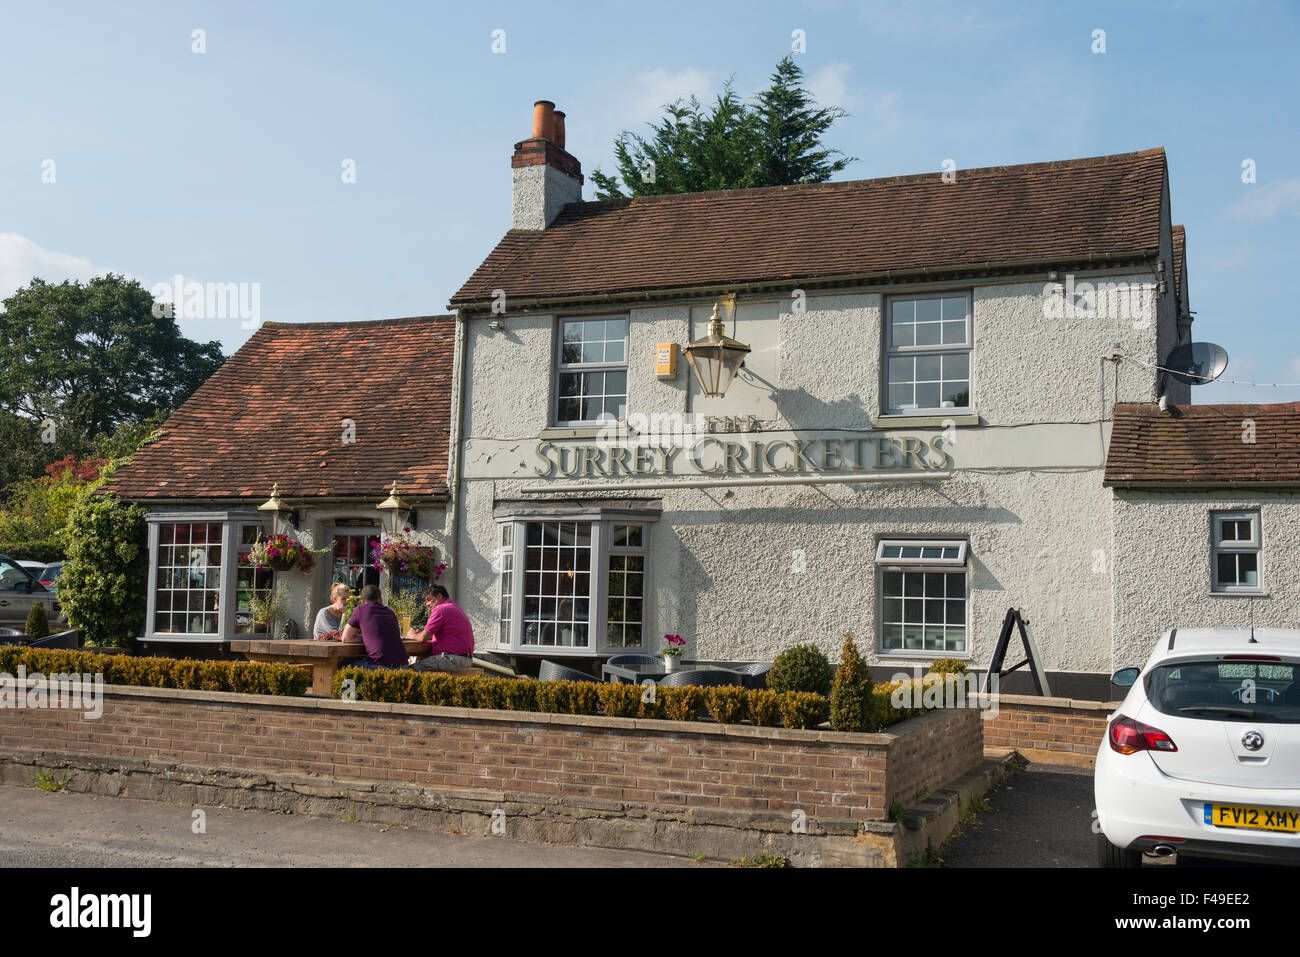 The Surrey Cricketers Pub, Chertsey Road, Windlesham, Surrey, England, United Kingdom Stock Photo